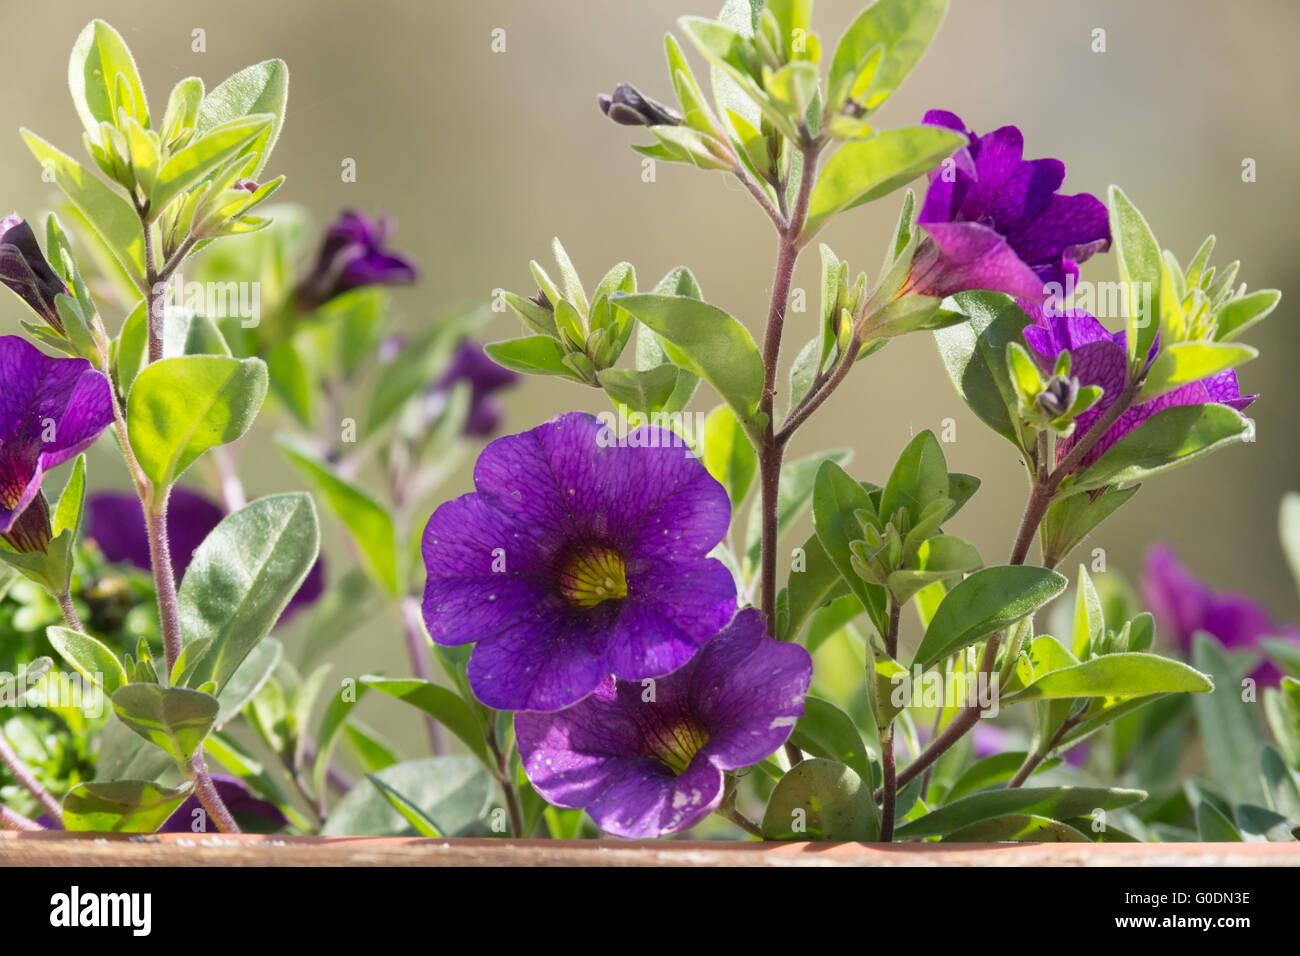 Purple begonias Stock Photo, Royalty Free Image: 103564146 - Alamy